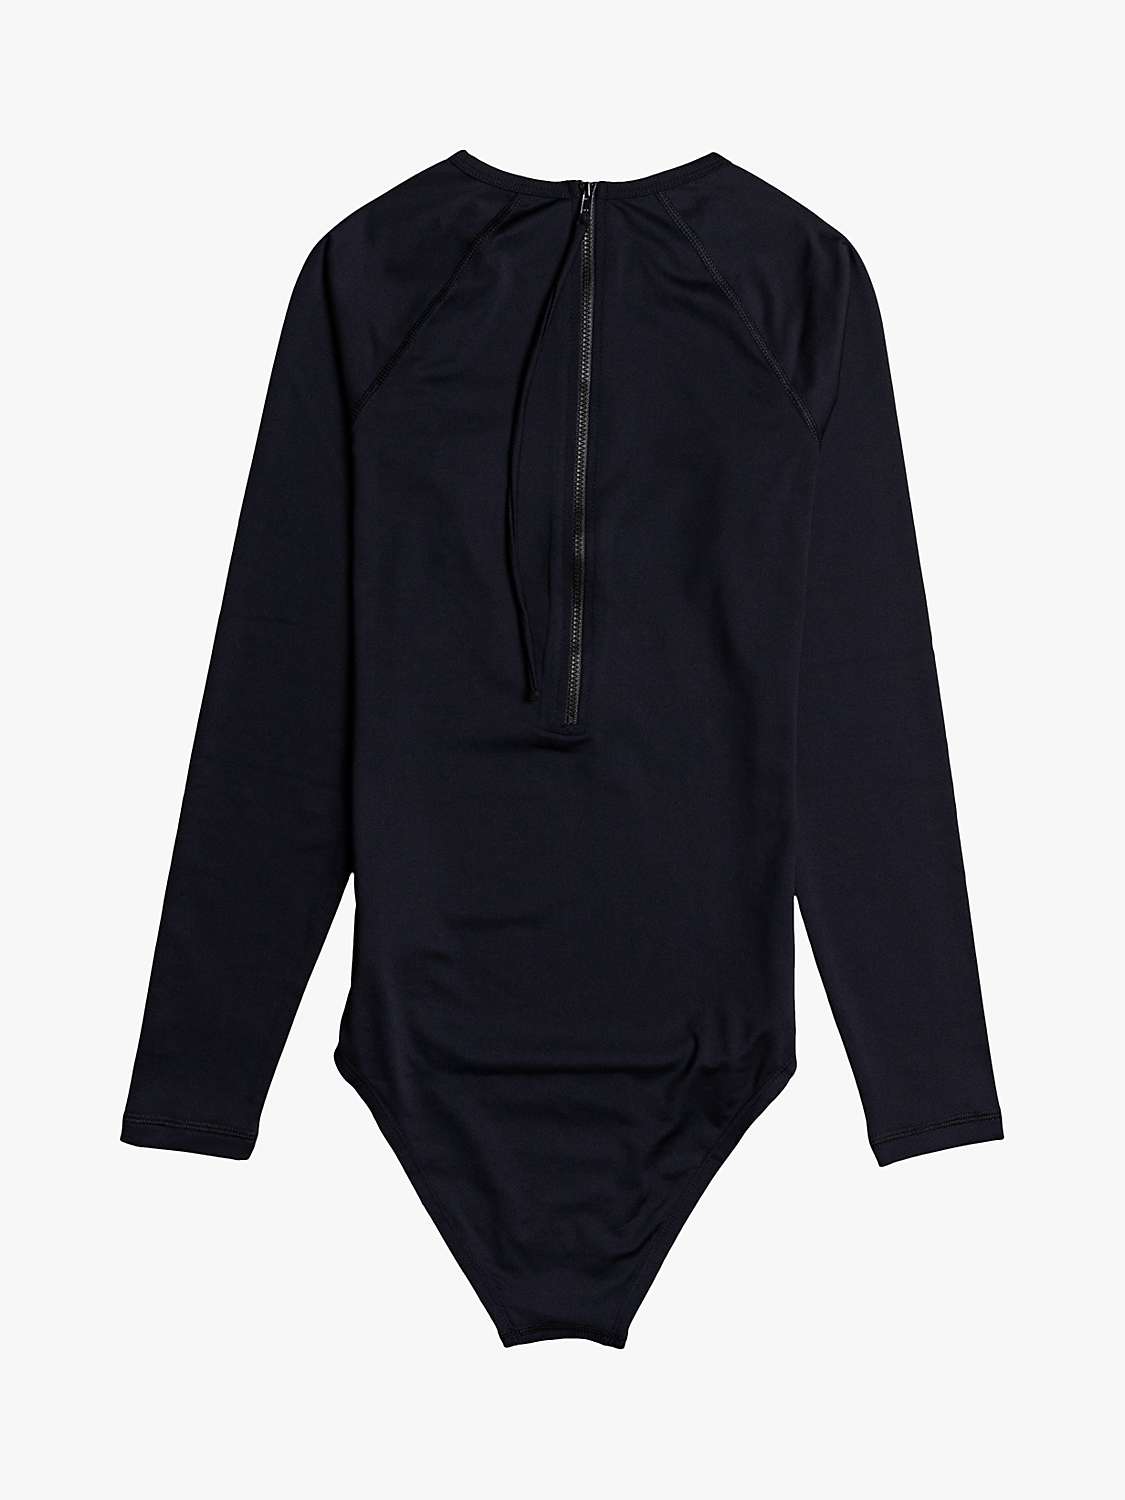 Buy Roxy Long Sleeve Swimsuit, Black Online at johnlewis.com